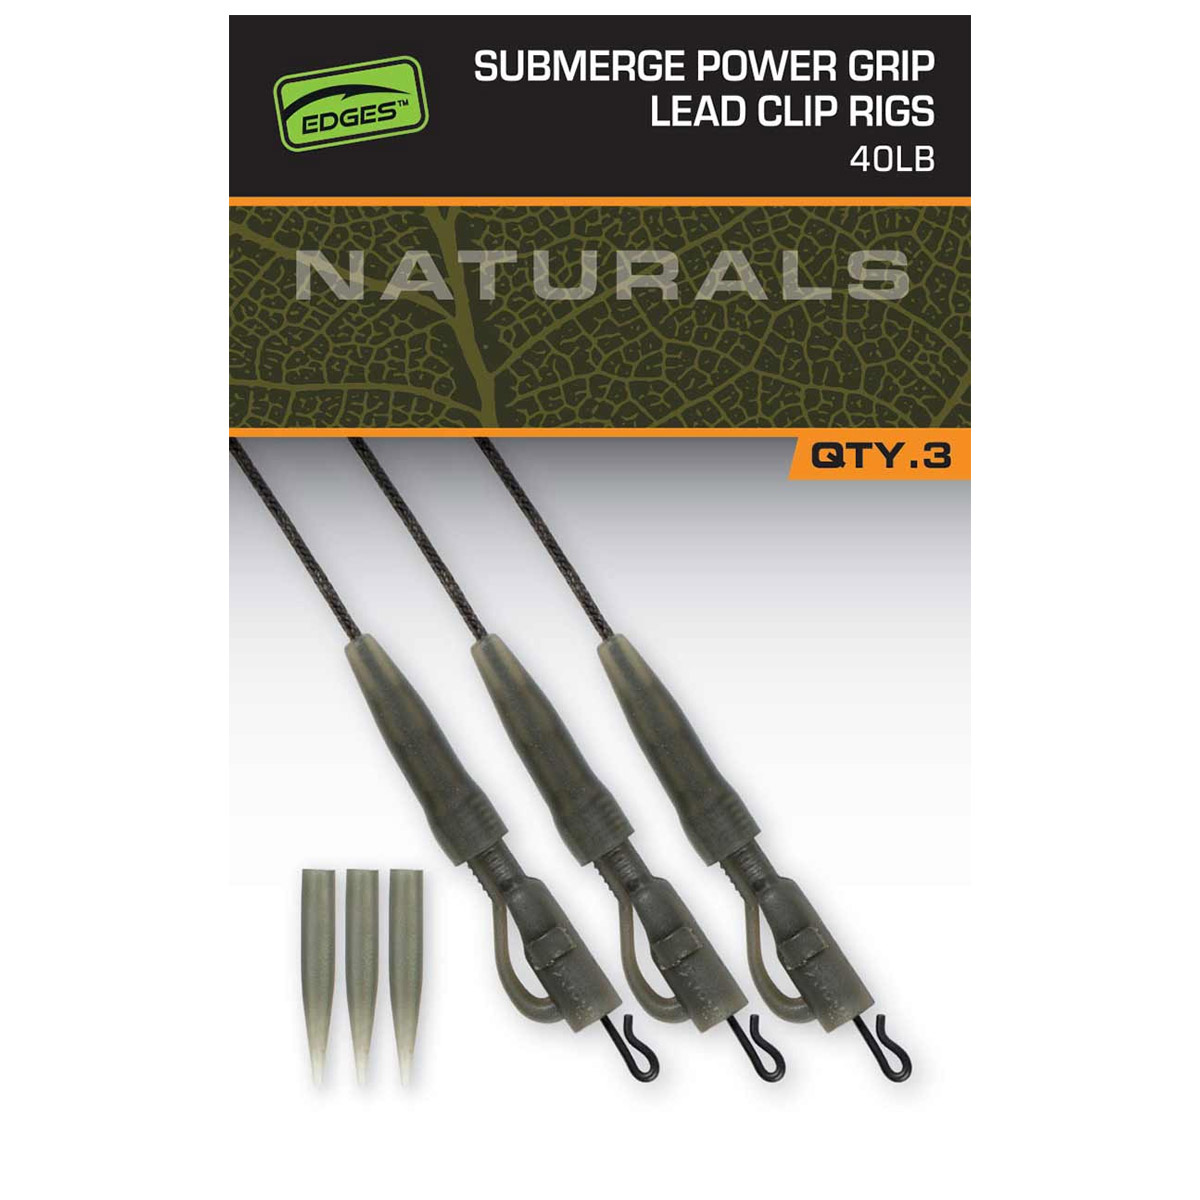 Fox Edges Naturals Submerge Power Grip Leadclip Leaders -  40 lbs